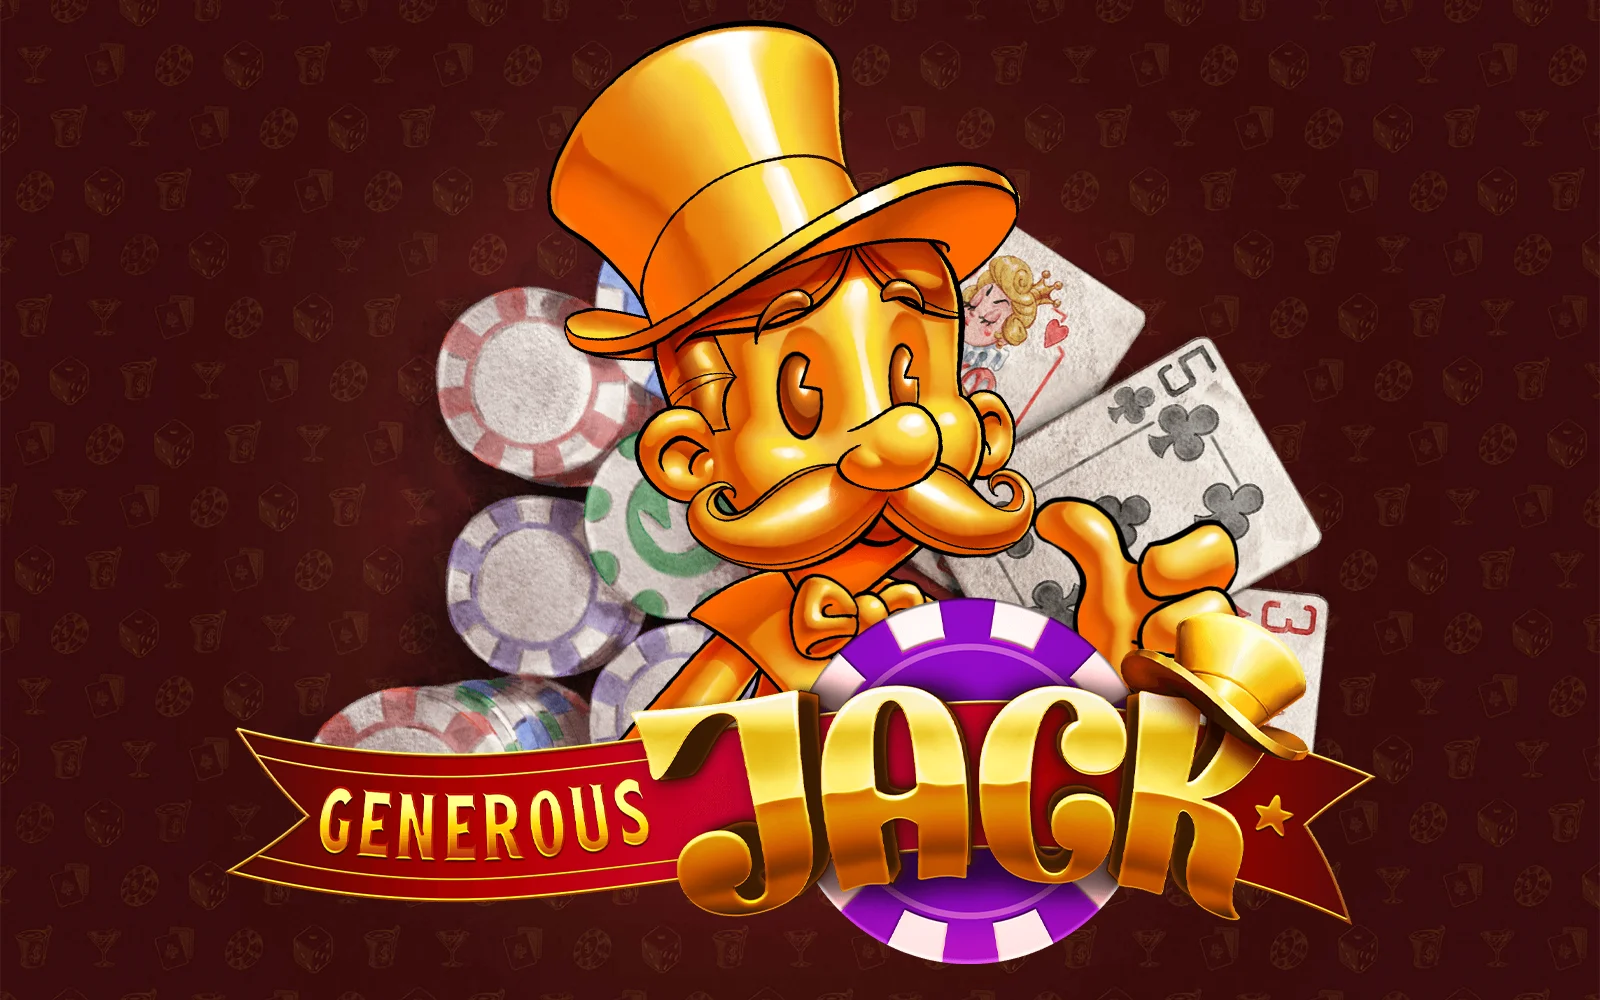 Gioca a Generous Jack sul casino online Starcasino.be